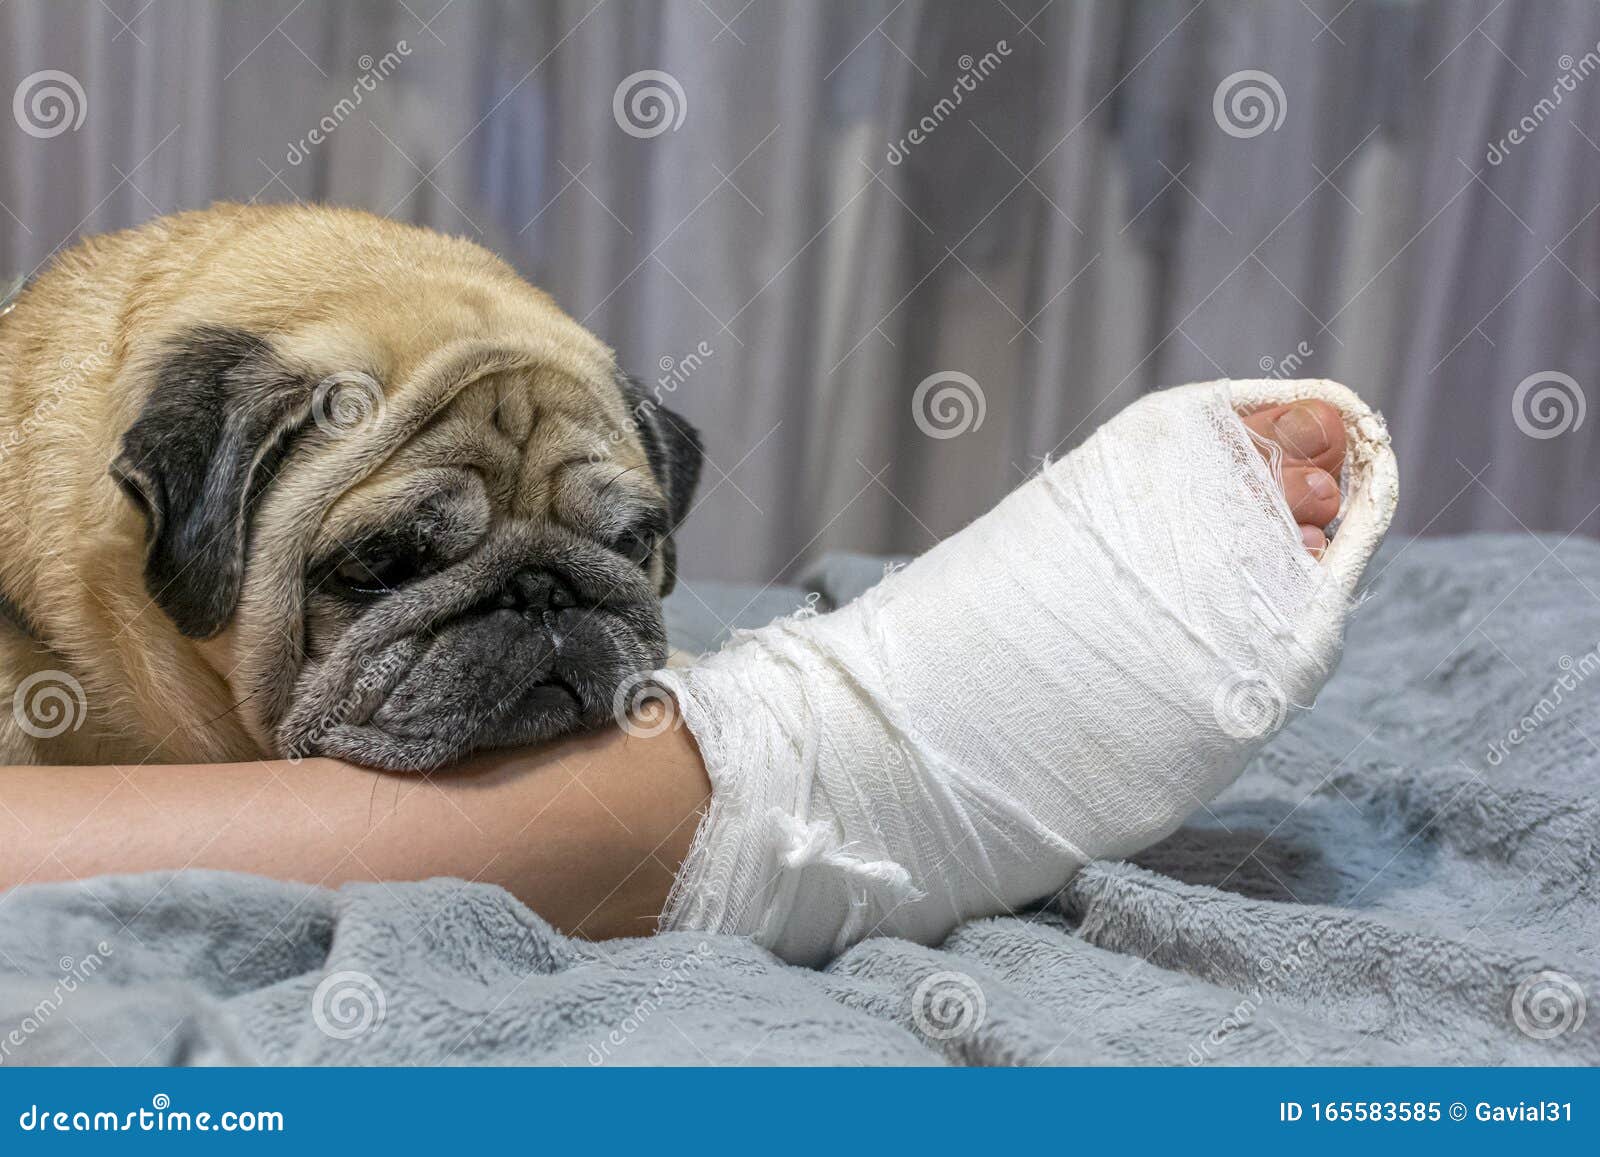 the pug laid his head on the ownerÃ¢â¬â¢s foot. human foot in a cast. the dog shows pity and compassion